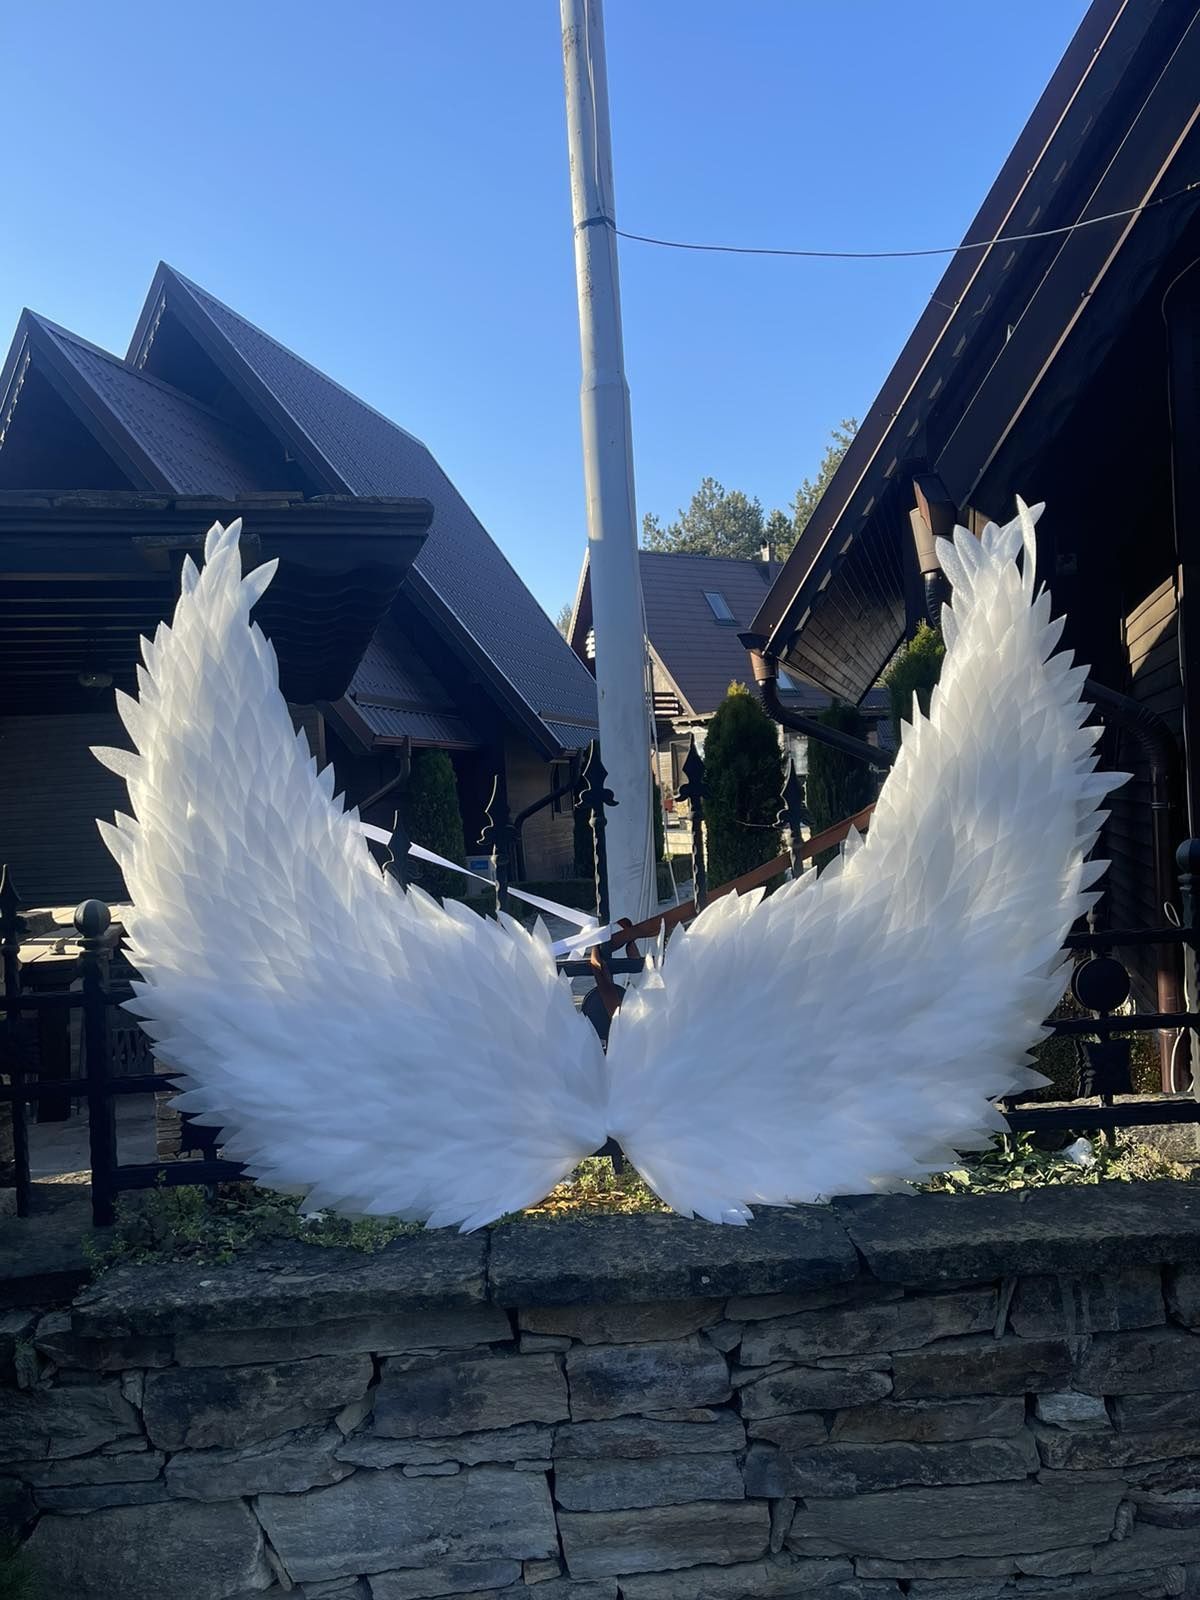 Ангелски крила за декорация и фотосесия